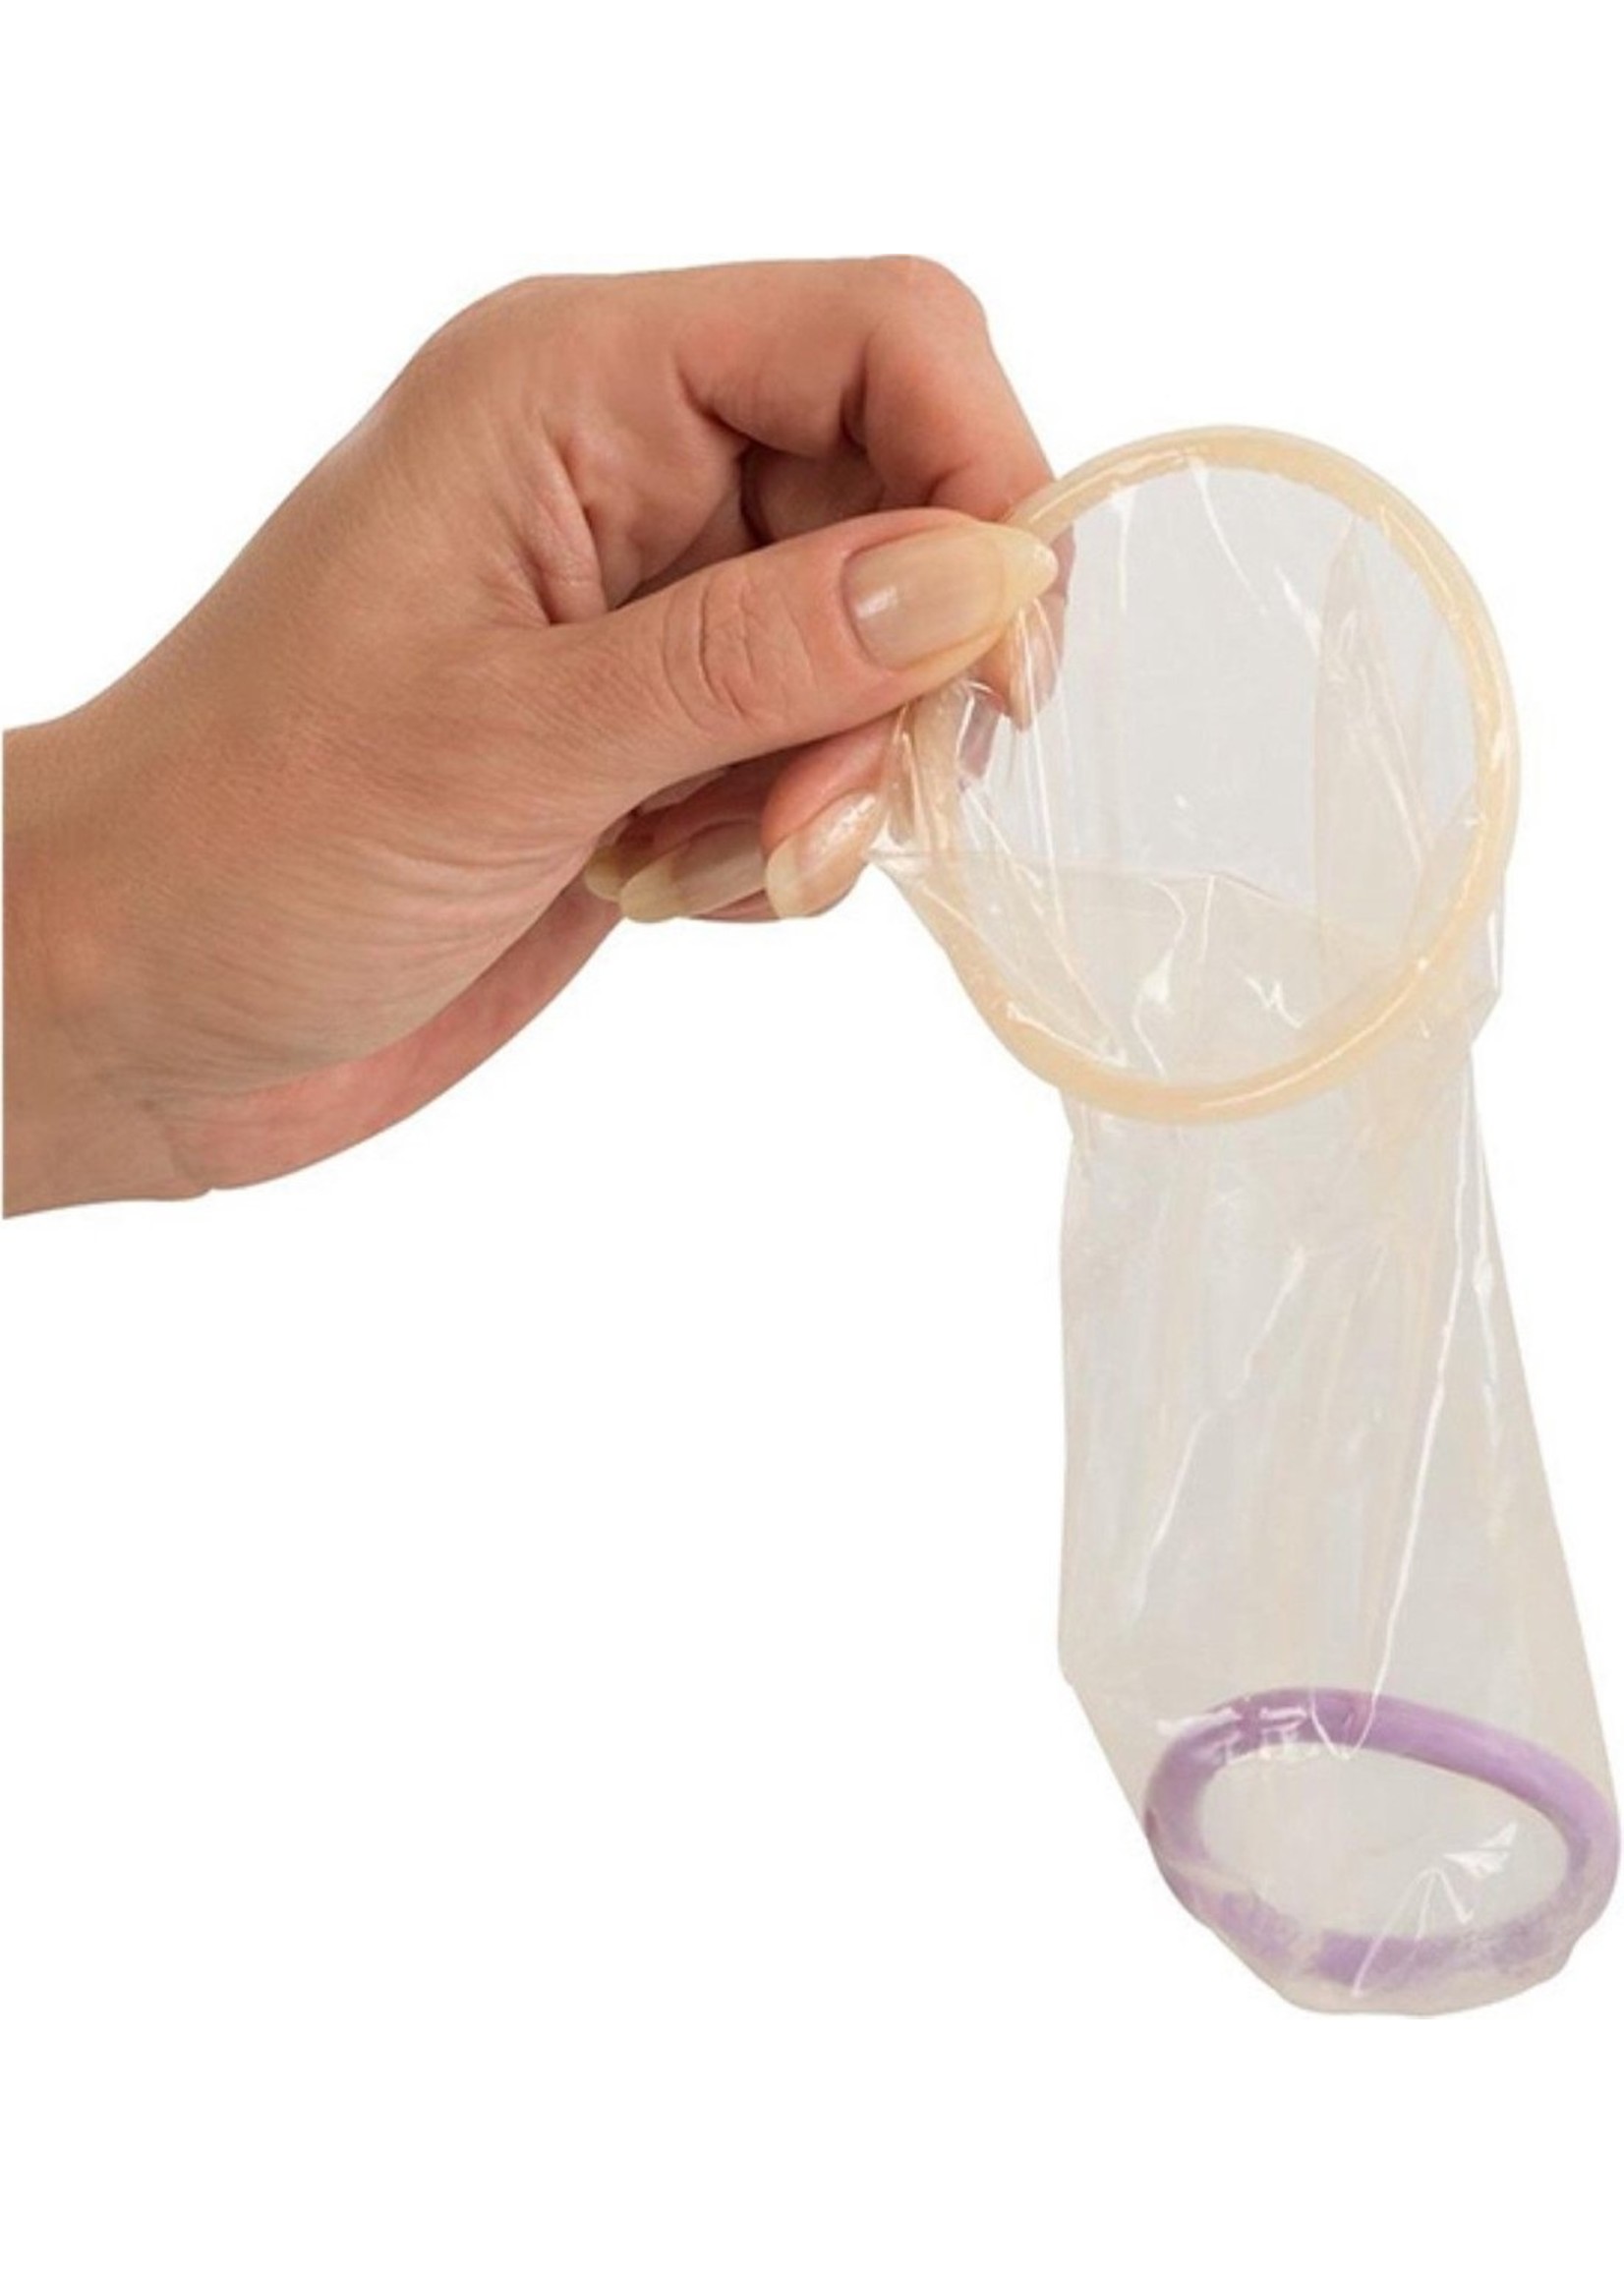 Ormelle - female condom 5 pcs pack